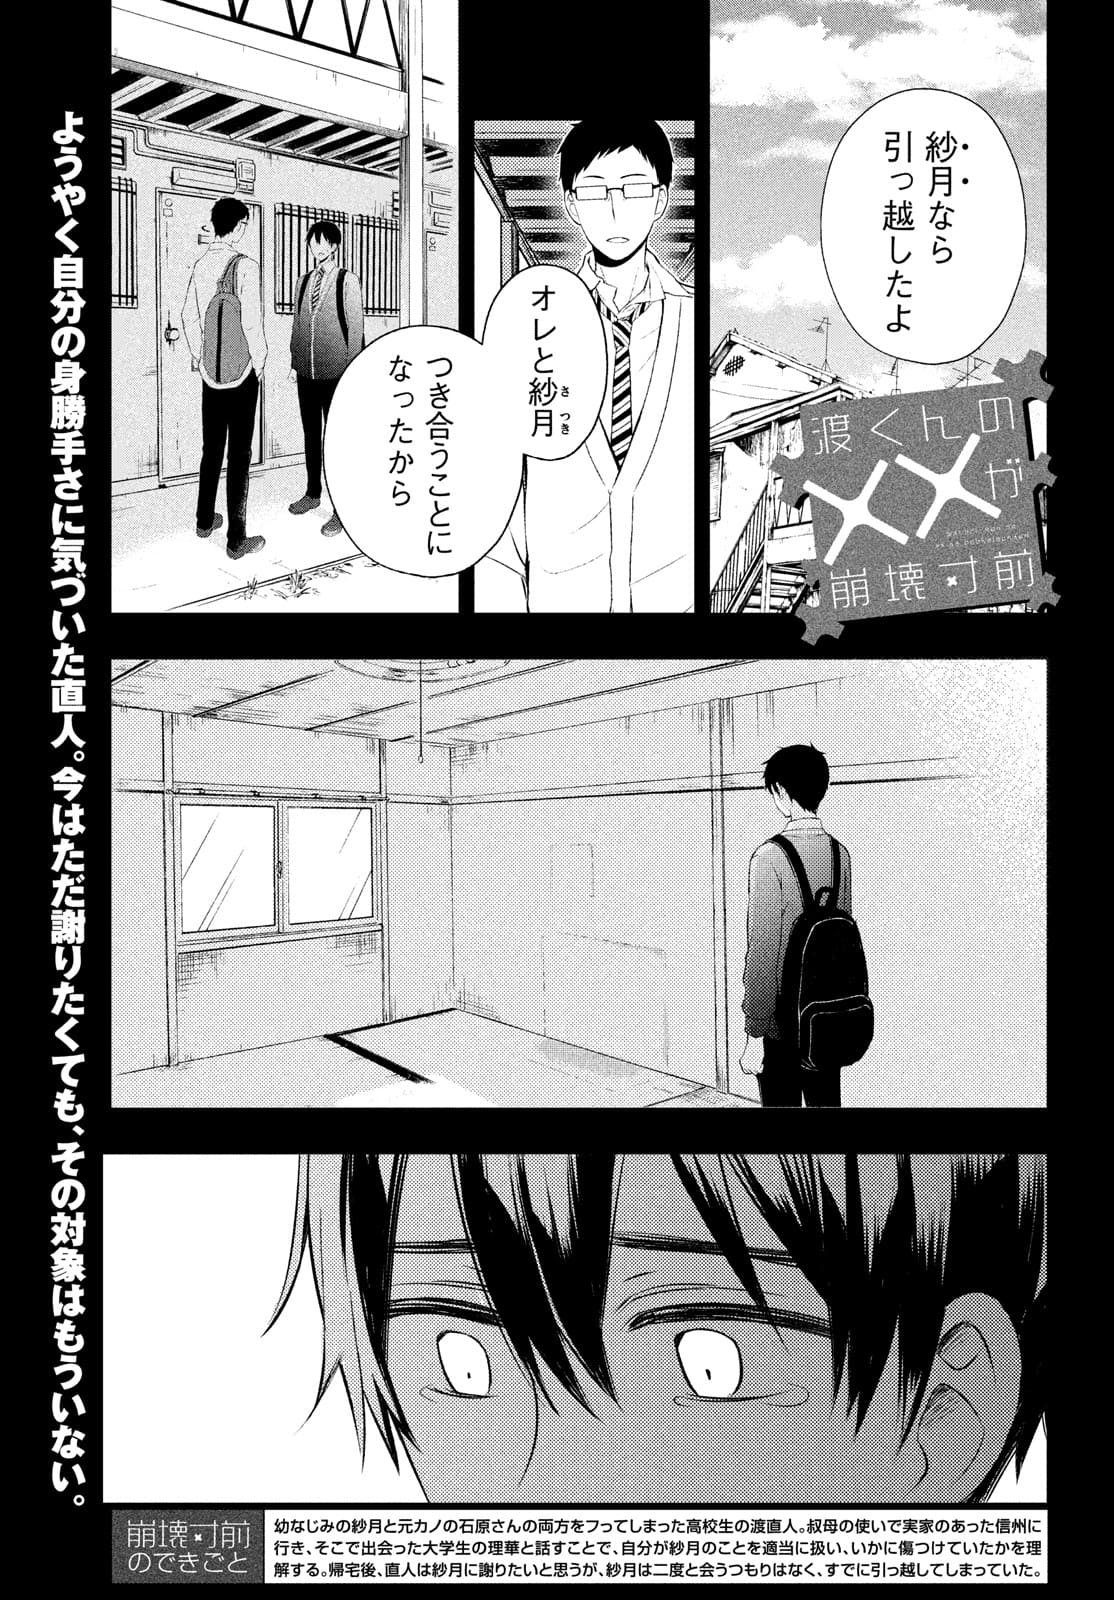 Watari-kun no xx ga Houkai Sunzen - Chapter 65 - Page 1